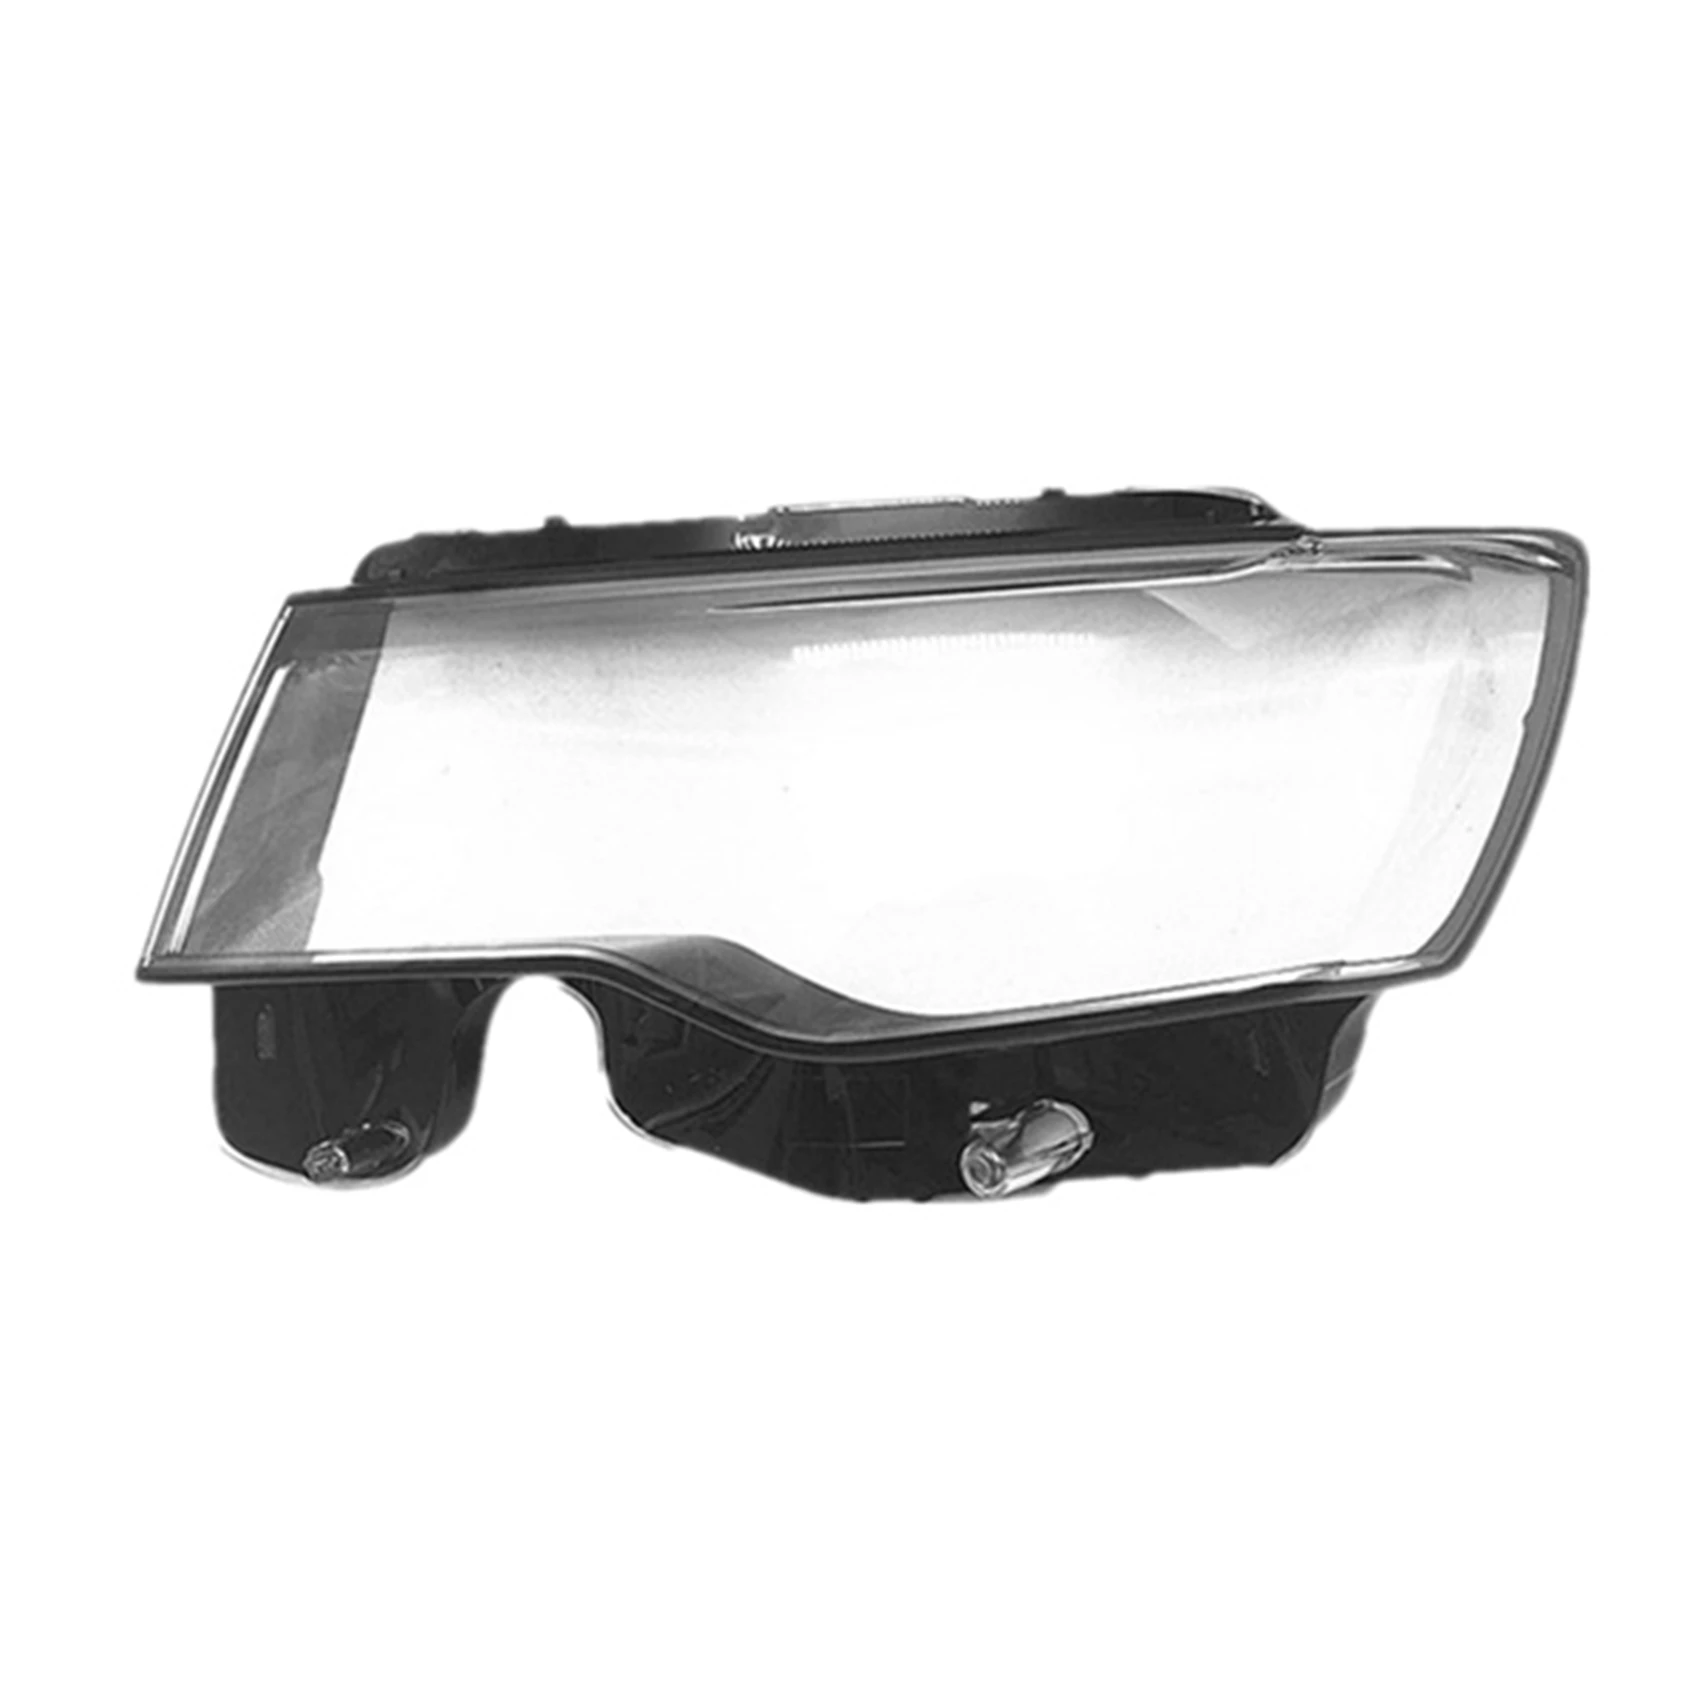 

Автомобильная левая сторона фары крышка объектива прозрачная головка фотолампа оболочка для Jeep Grand Cherokee 2014-2019